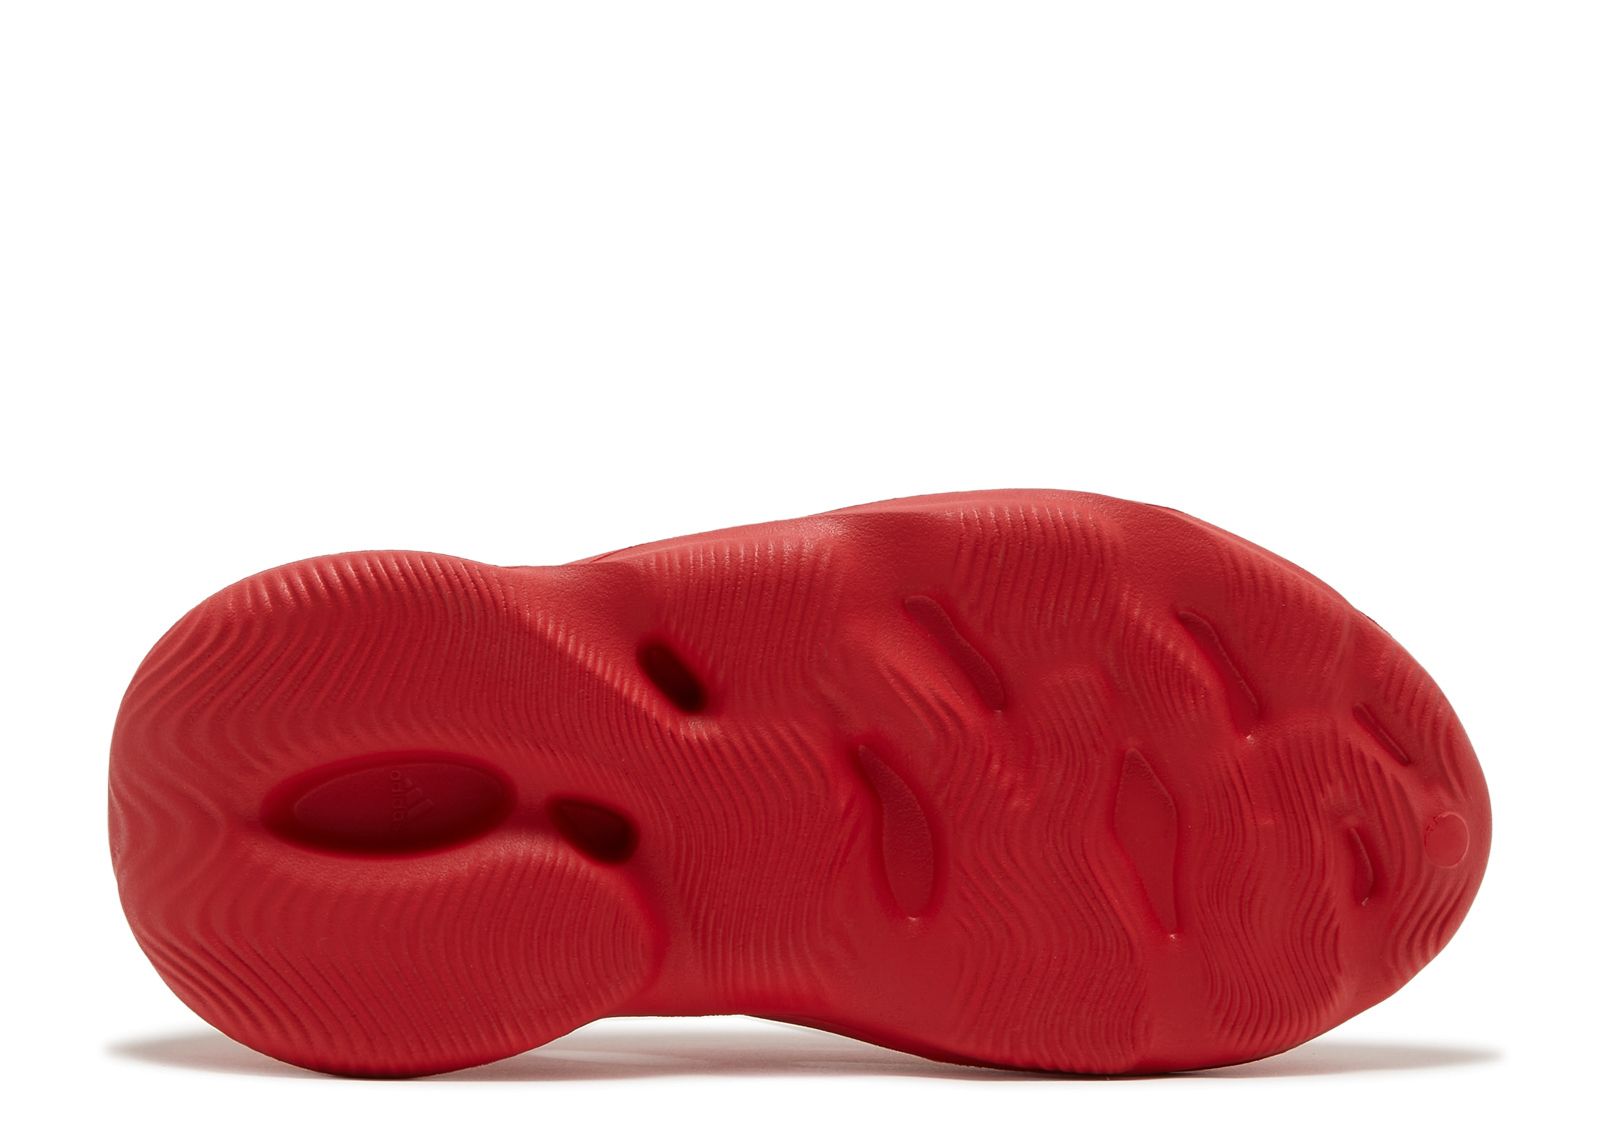 Adidas Yeezy Foam Runner Vermillioin Sneakers